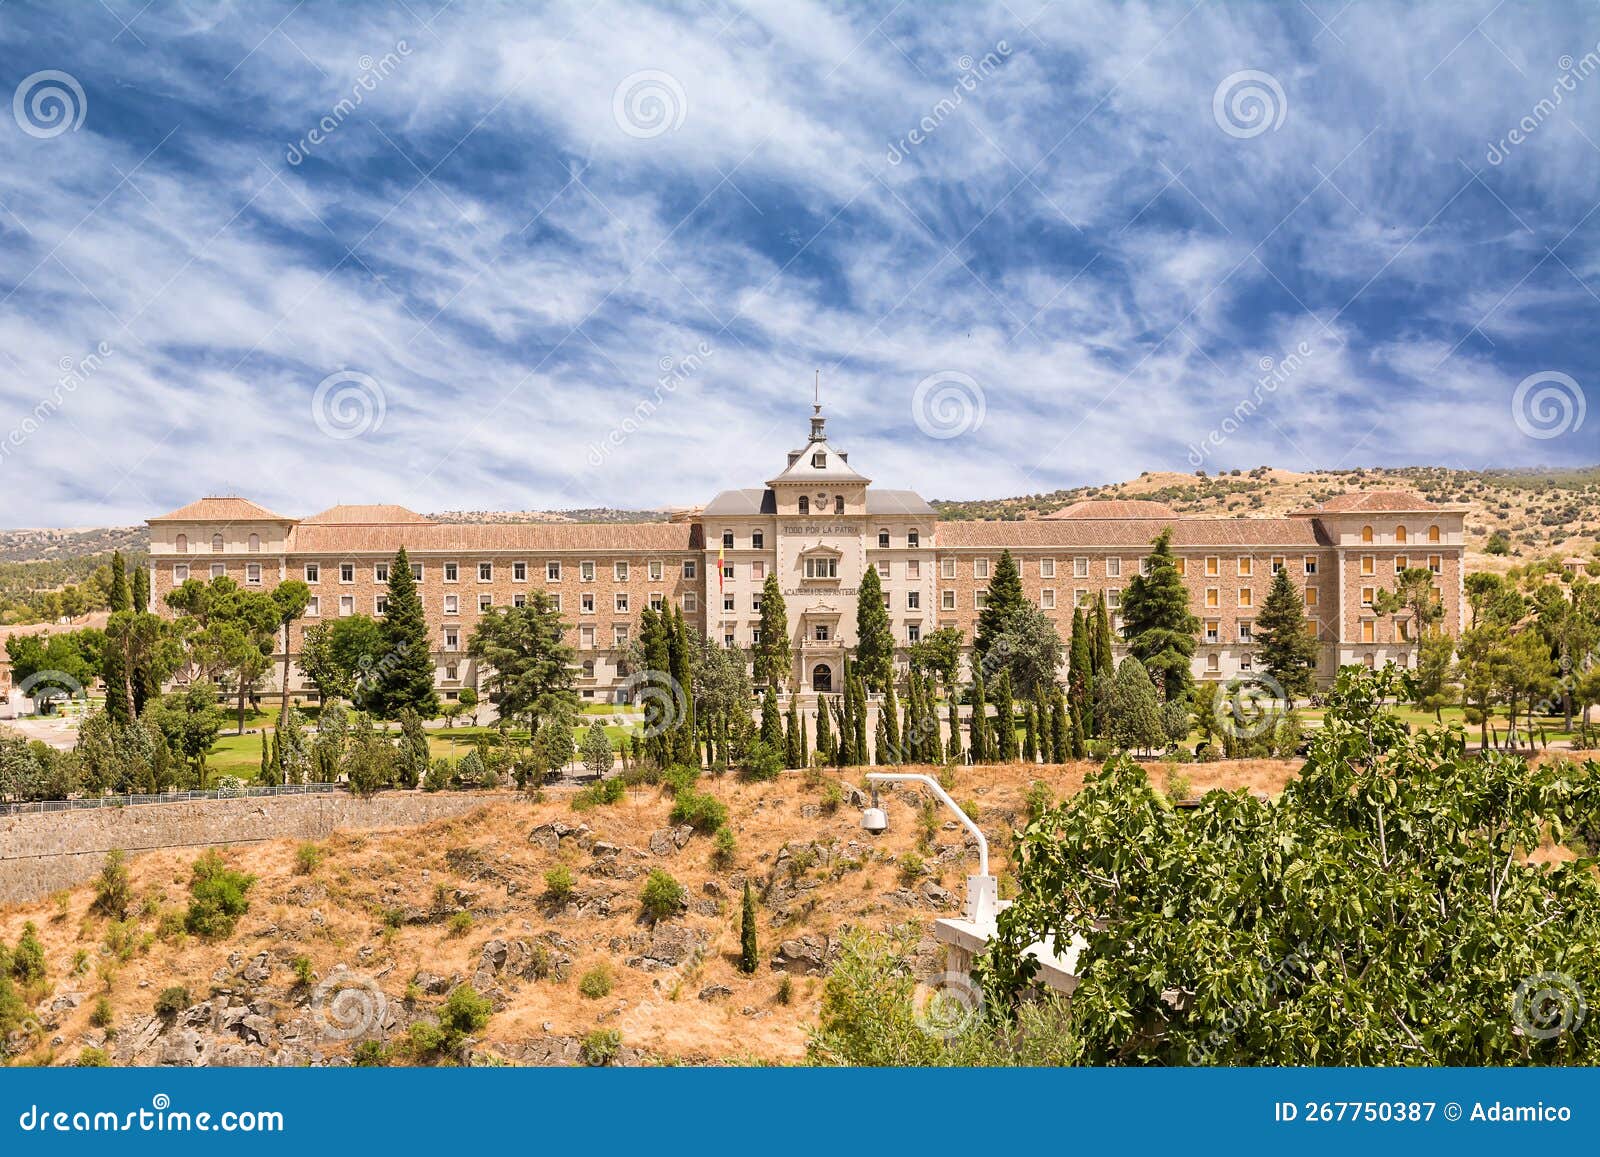 palace of the infanteria academy of toledo